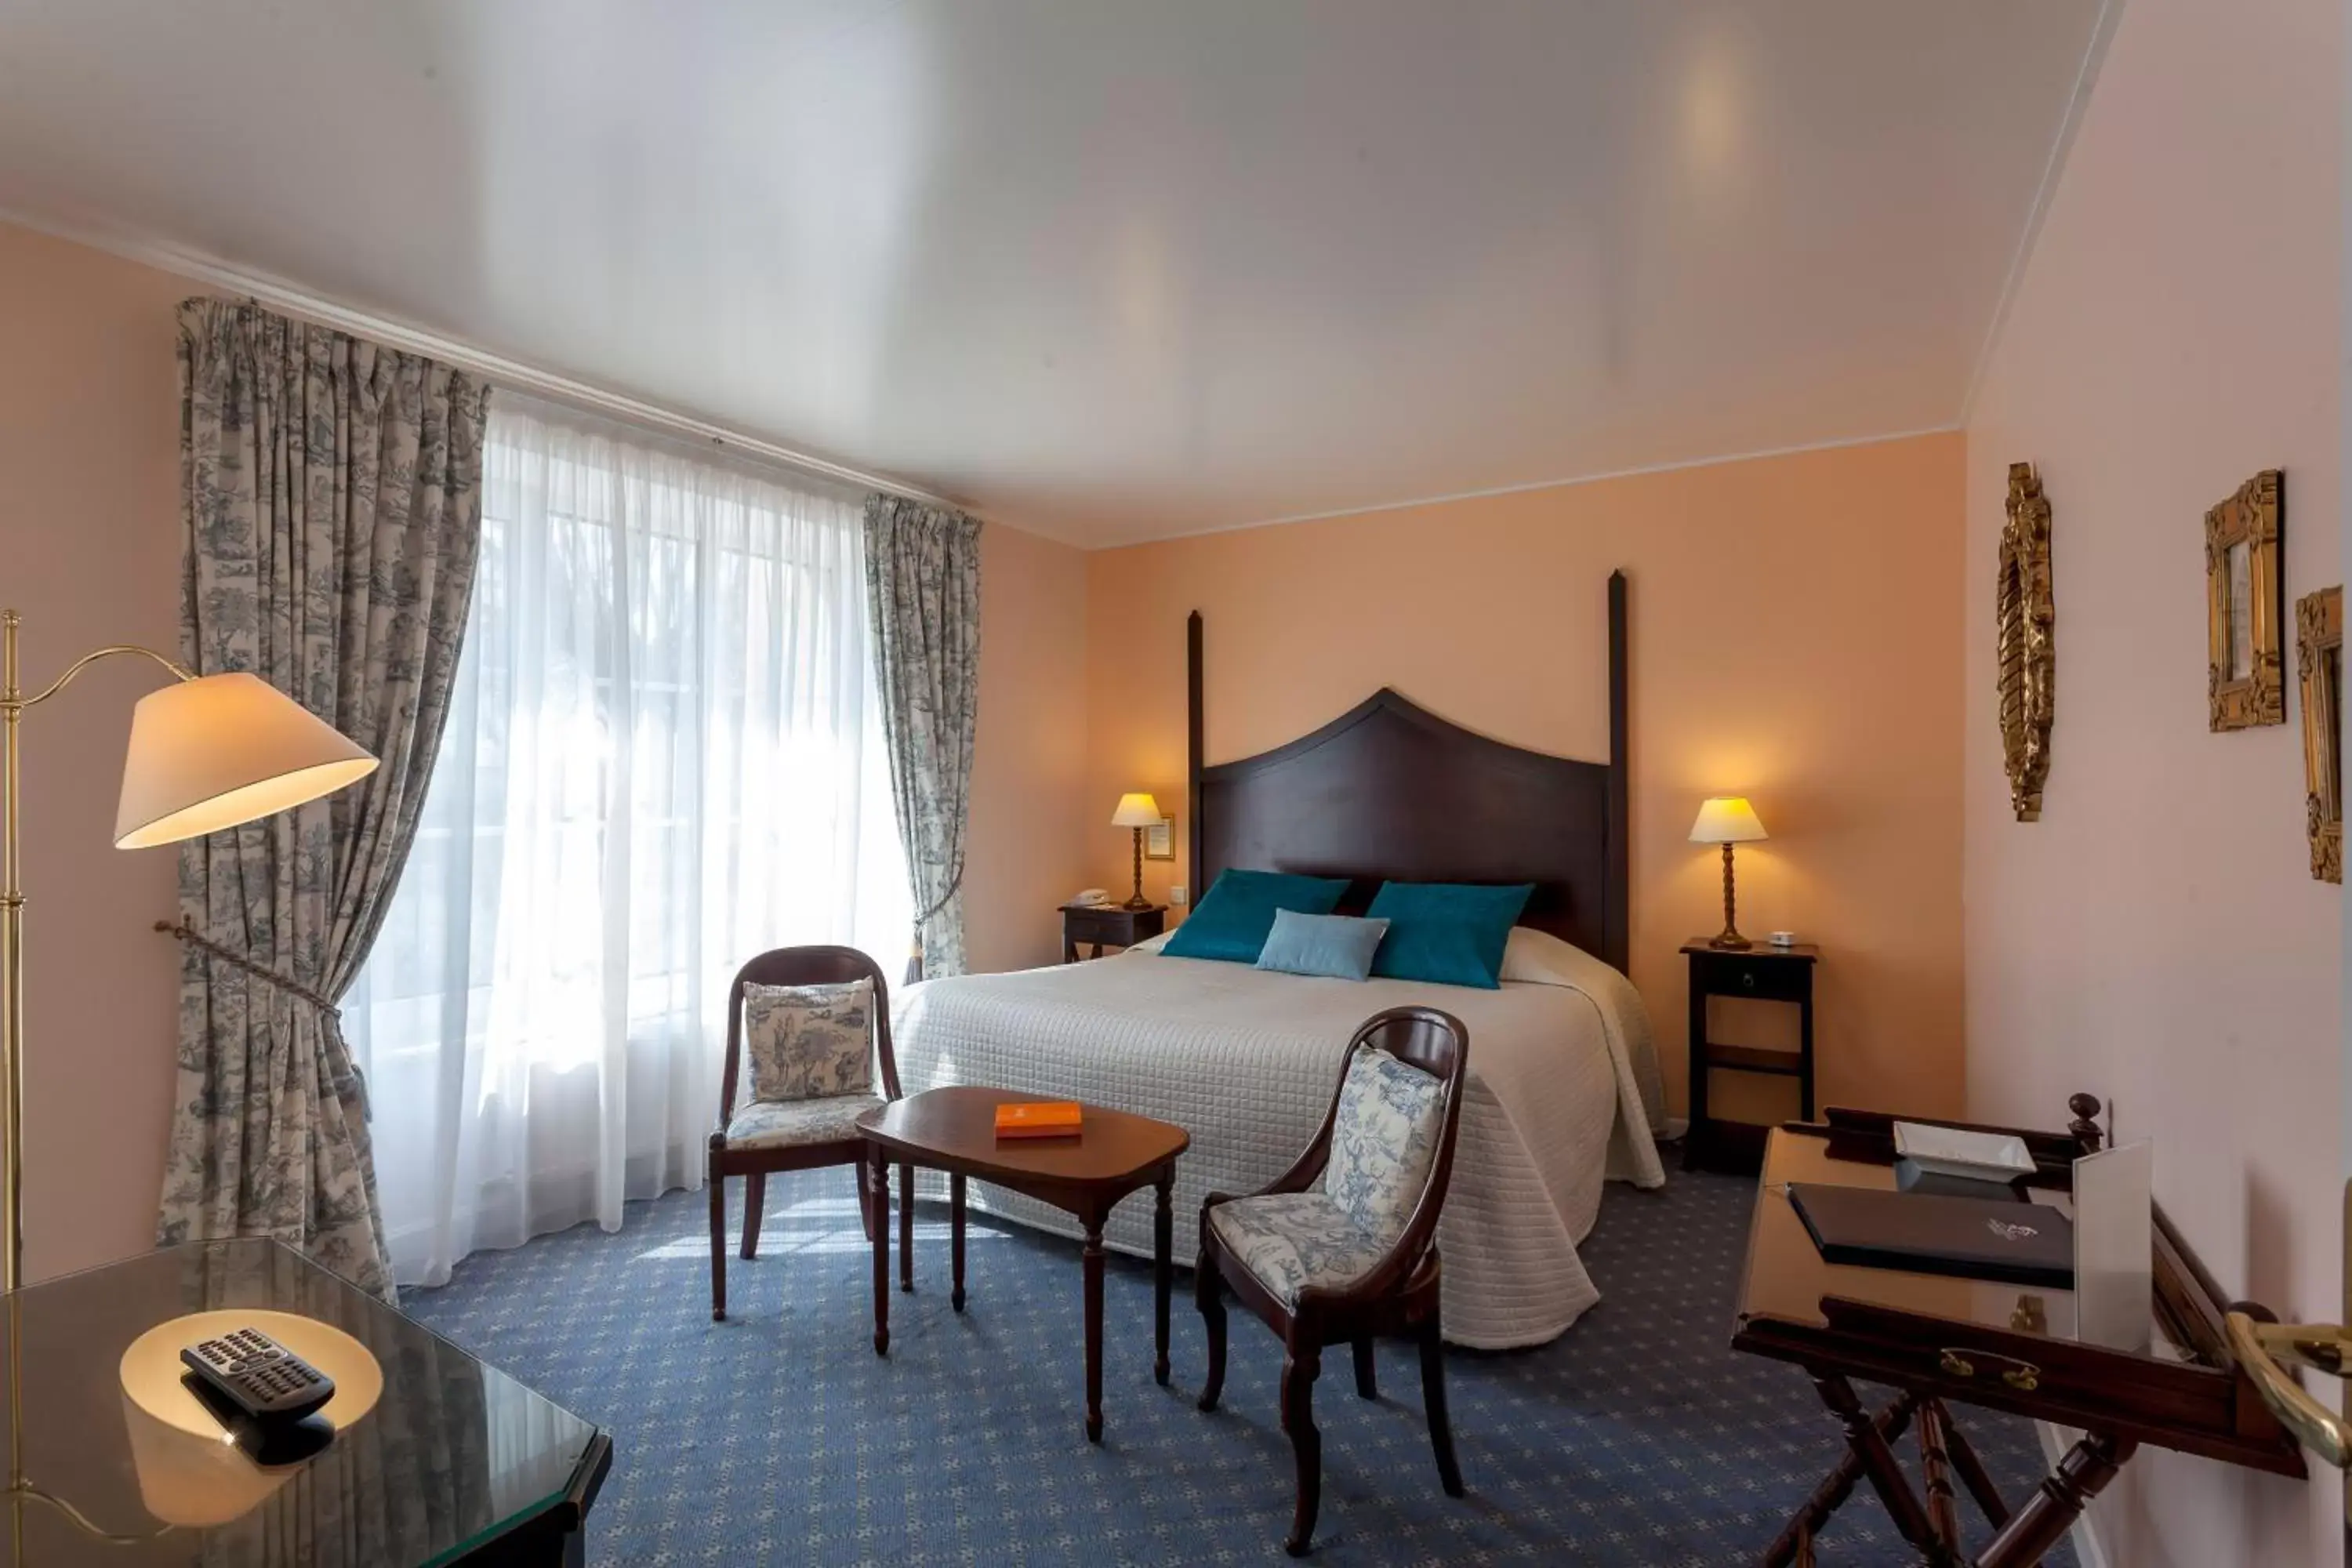 Day, Bed in Grand Hôtel "Château de Sully" - Piscine & Spa